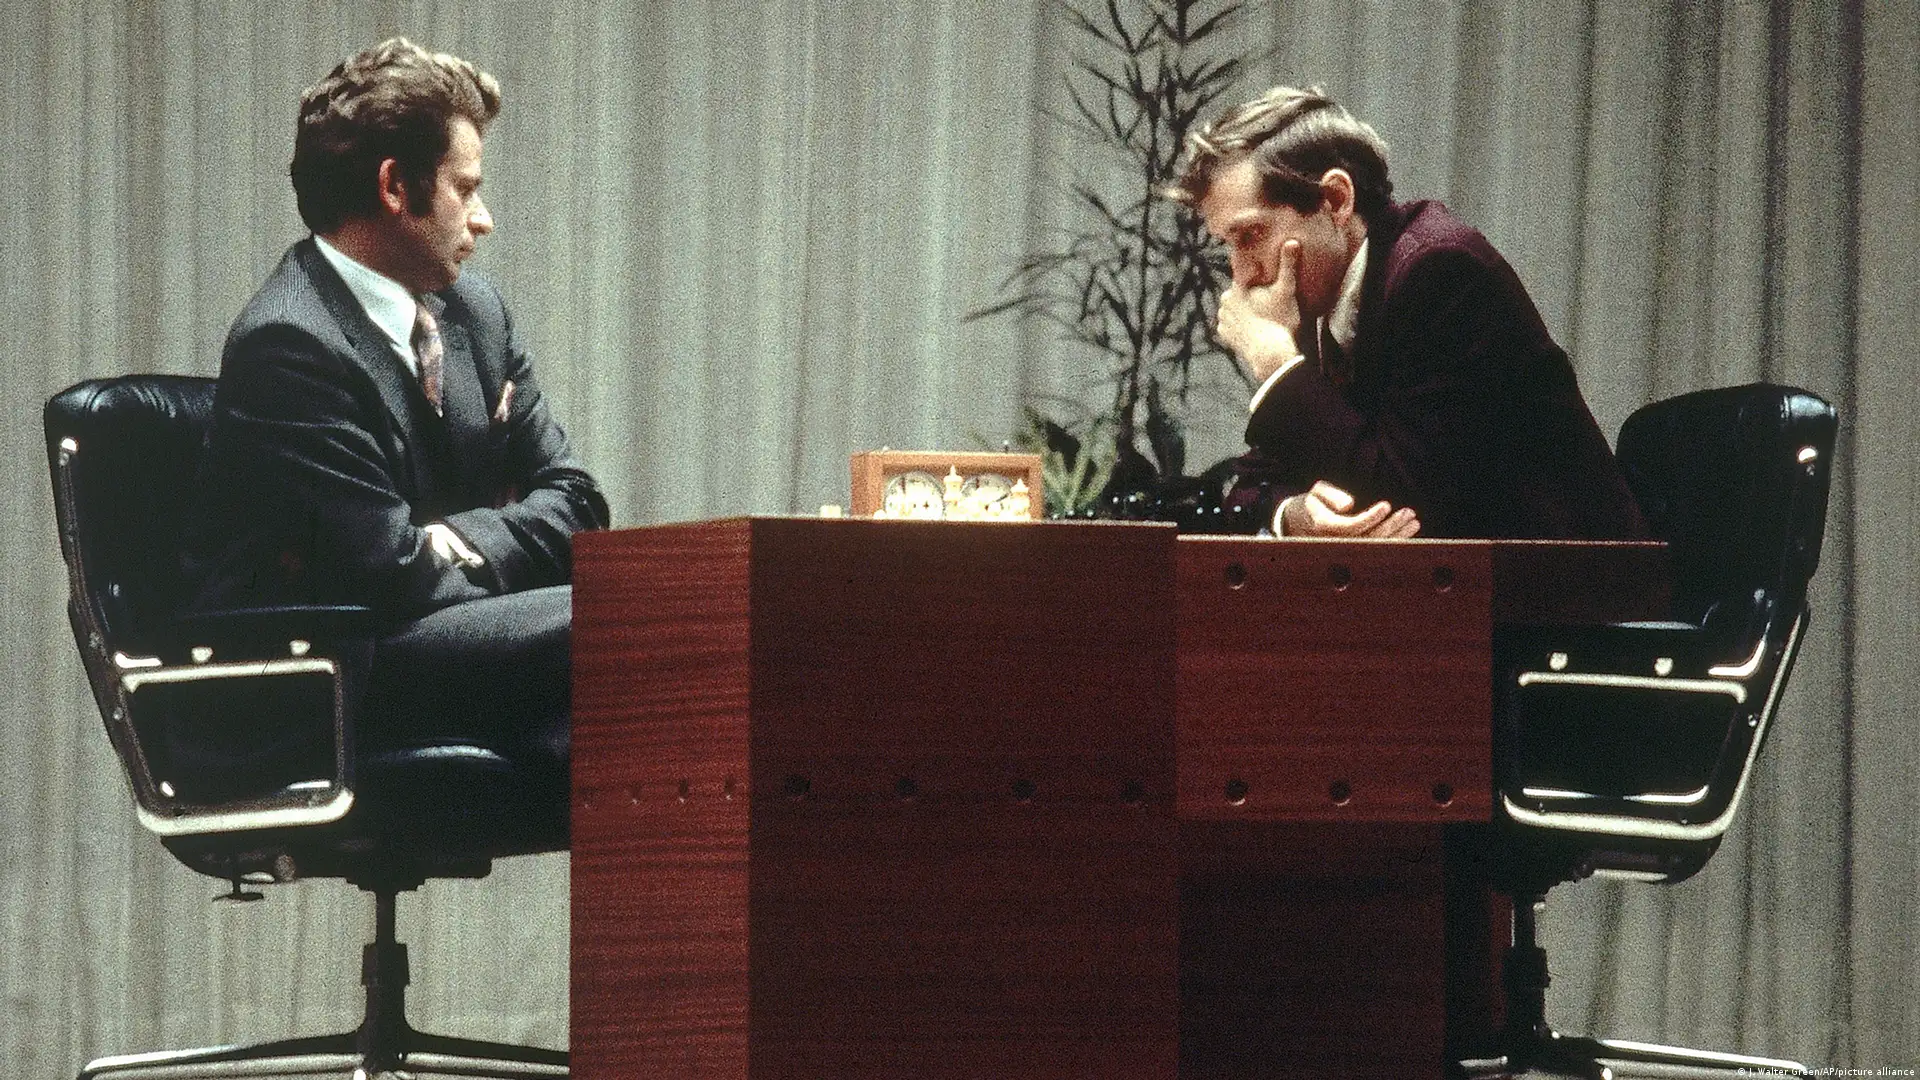 World chess Champion, Boris Spassky of Russia shown being